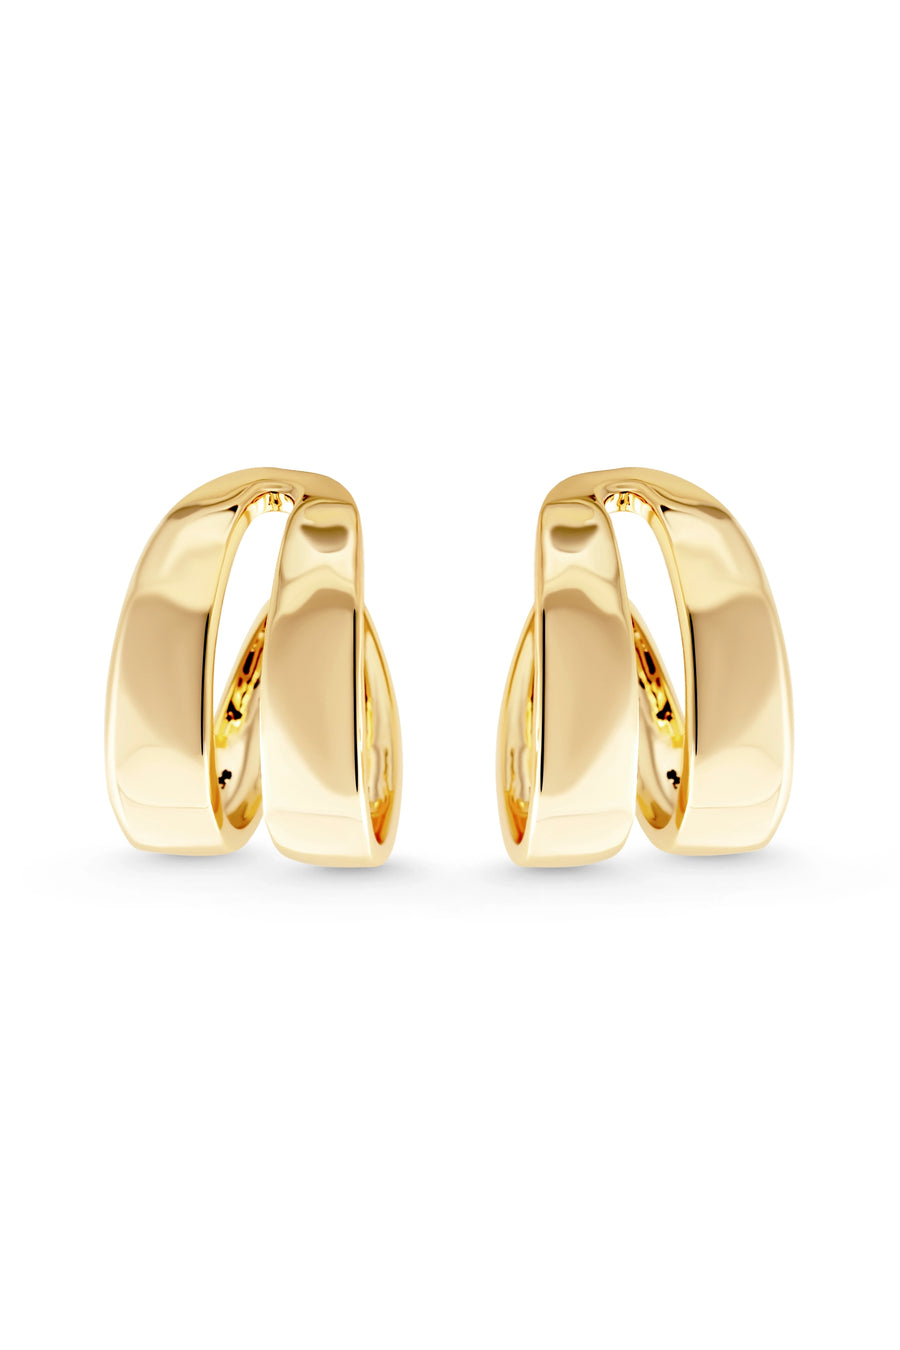 EMPRESS Earrings. Double band earrings, 18K gold vermeil, handmade, hypoallergenic, water-resistant